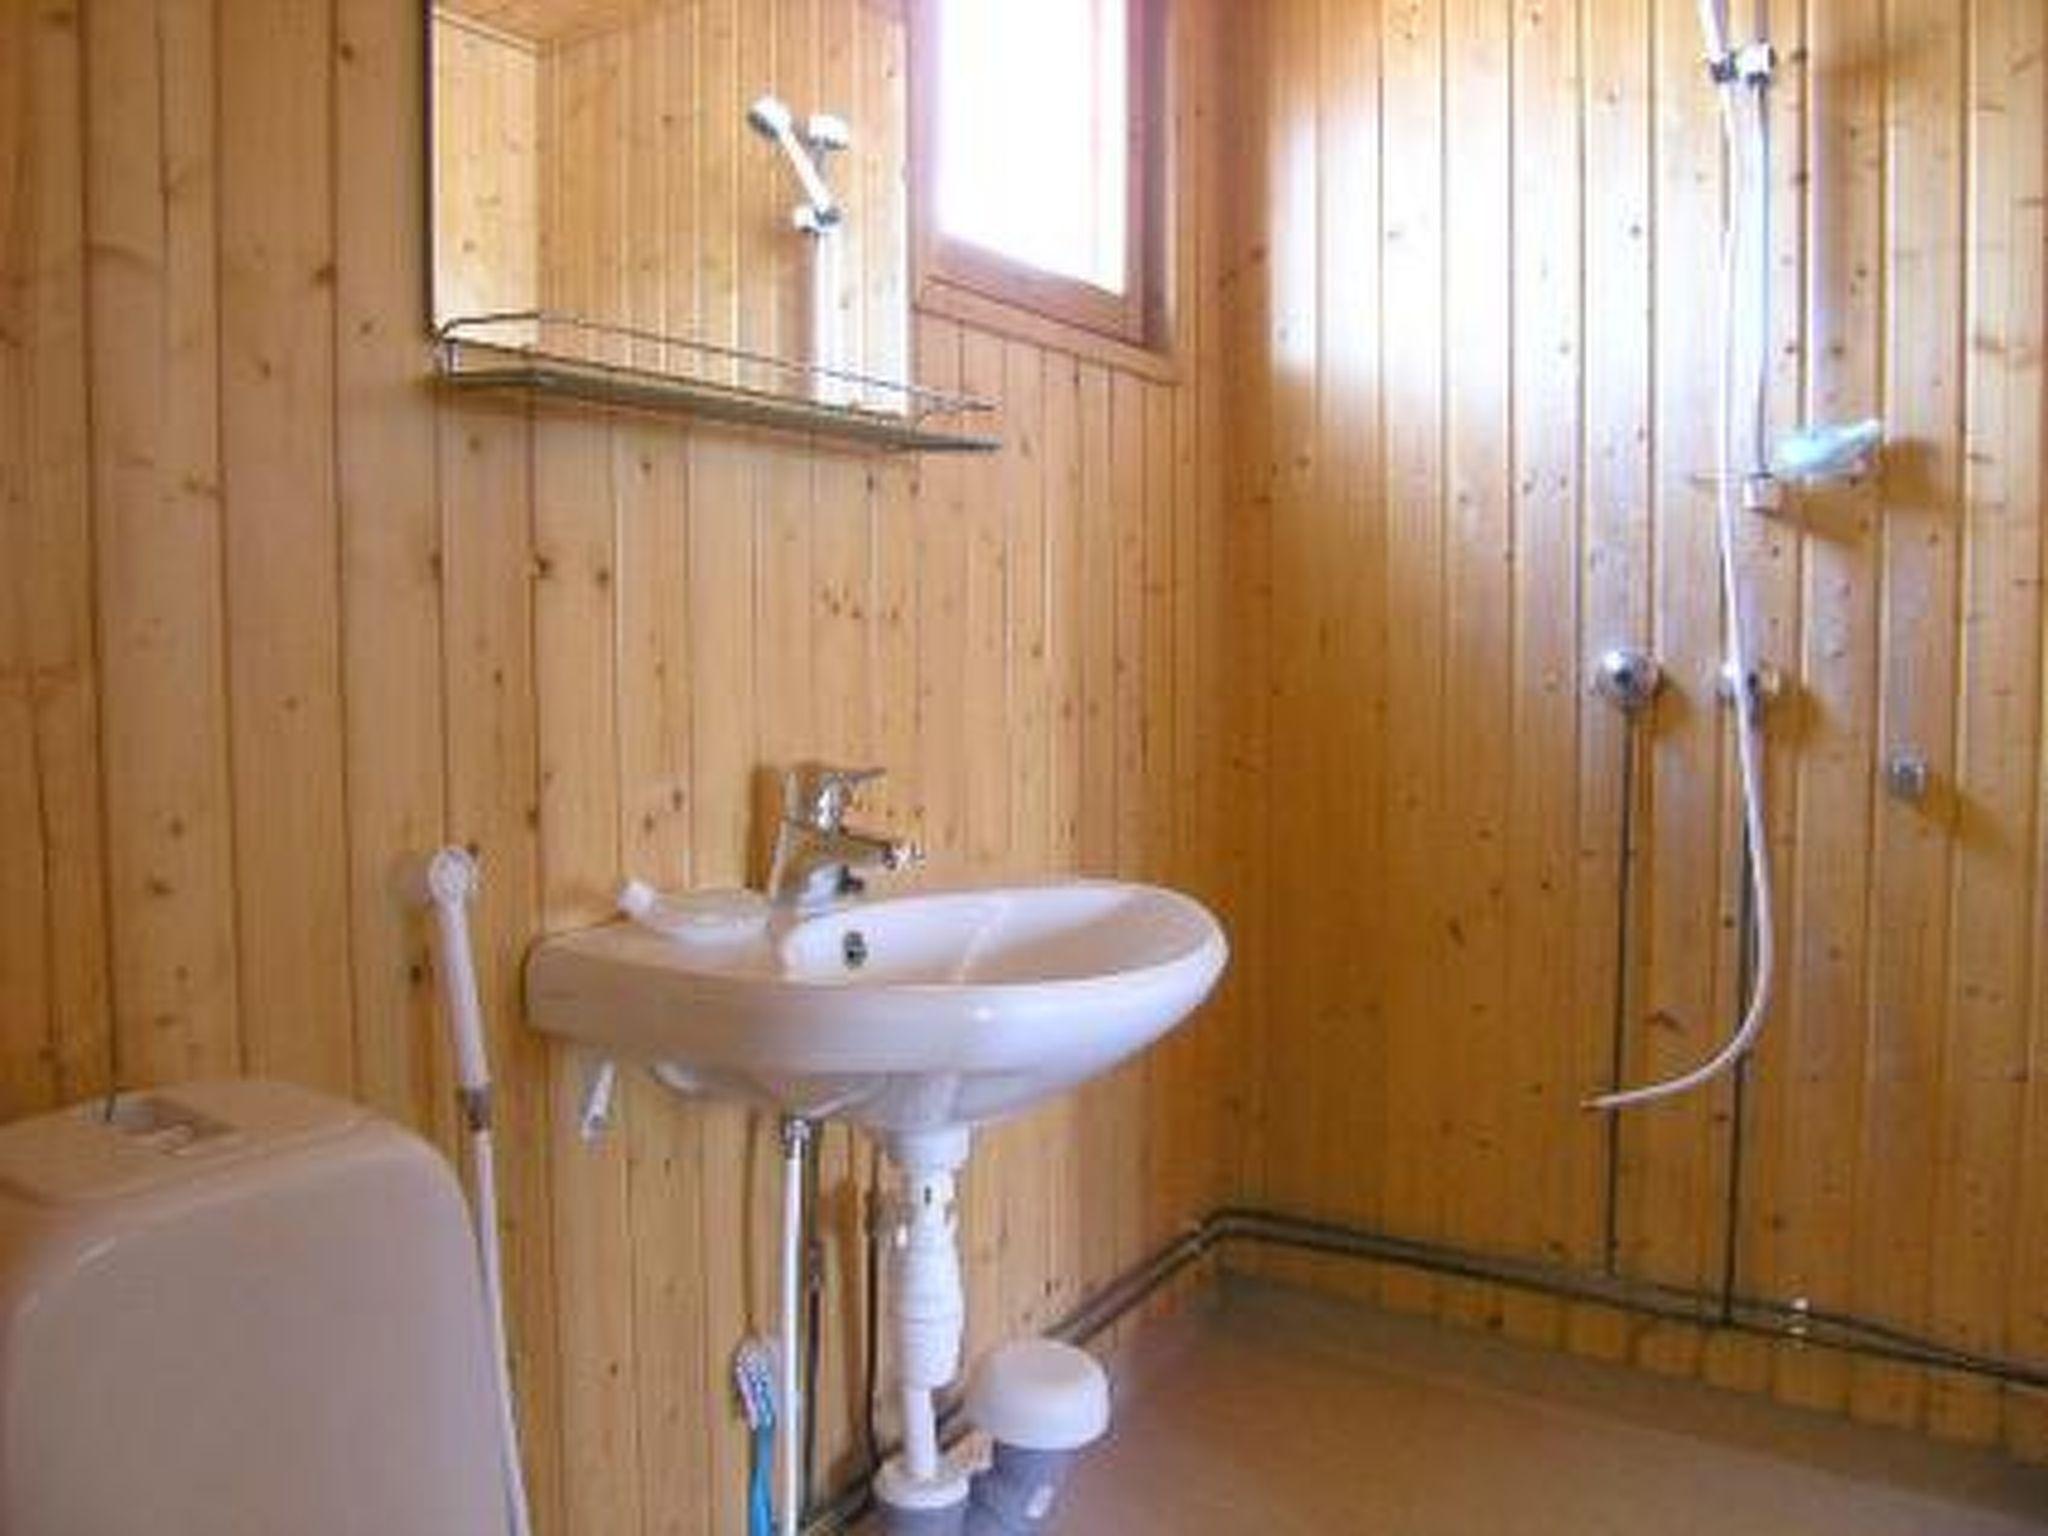 Photo 4 - Maison de 1 chambre à Taivalkoski avec sauna